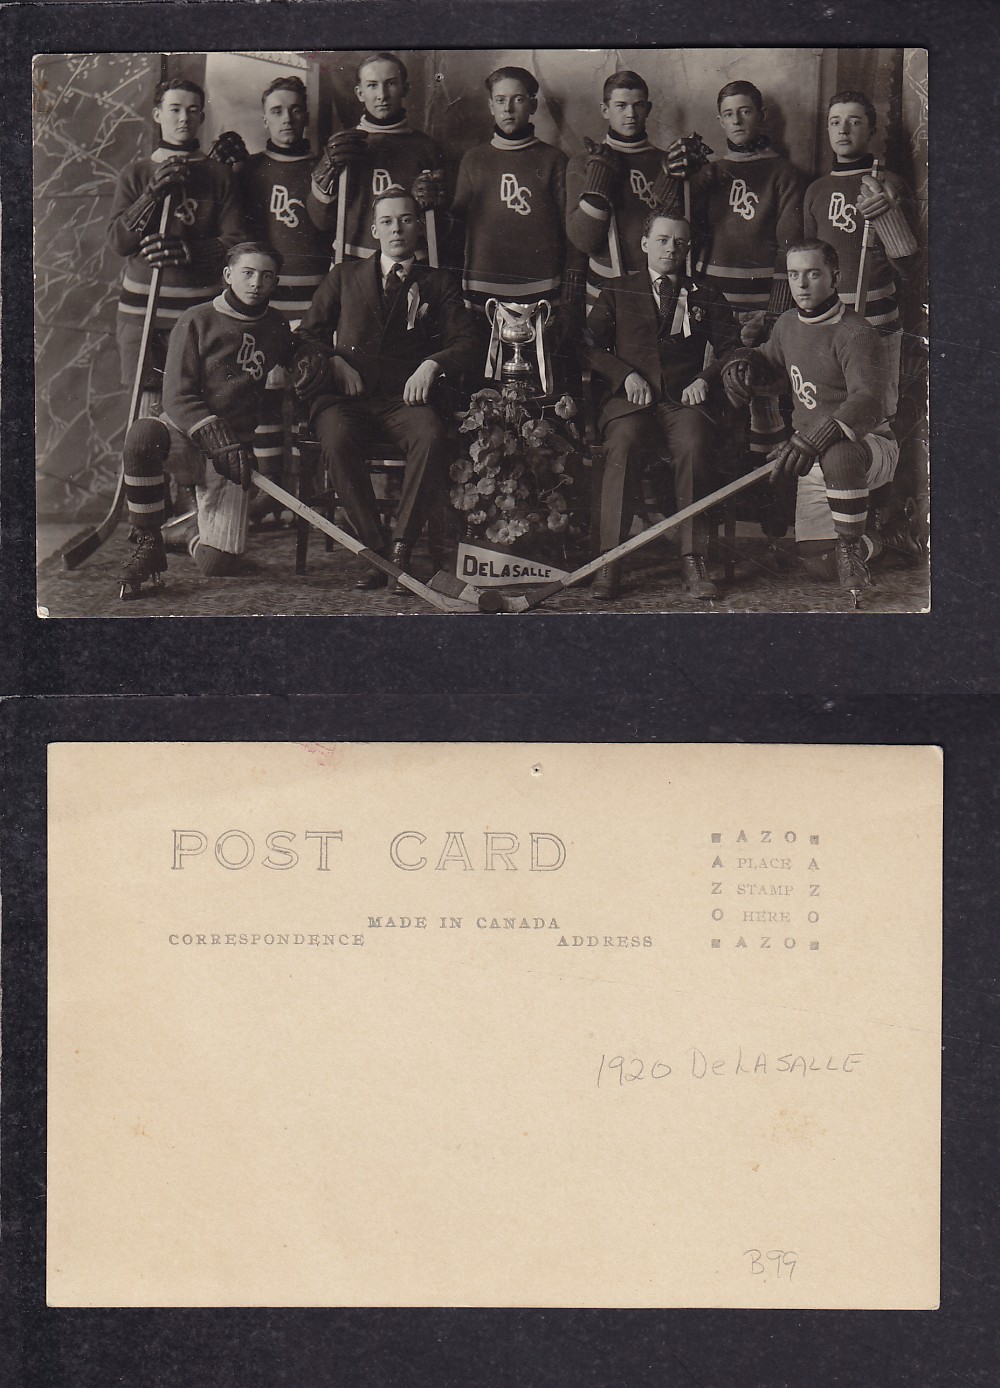 1920 DE LASALLE HOCKEY TEAM POST CARD photo